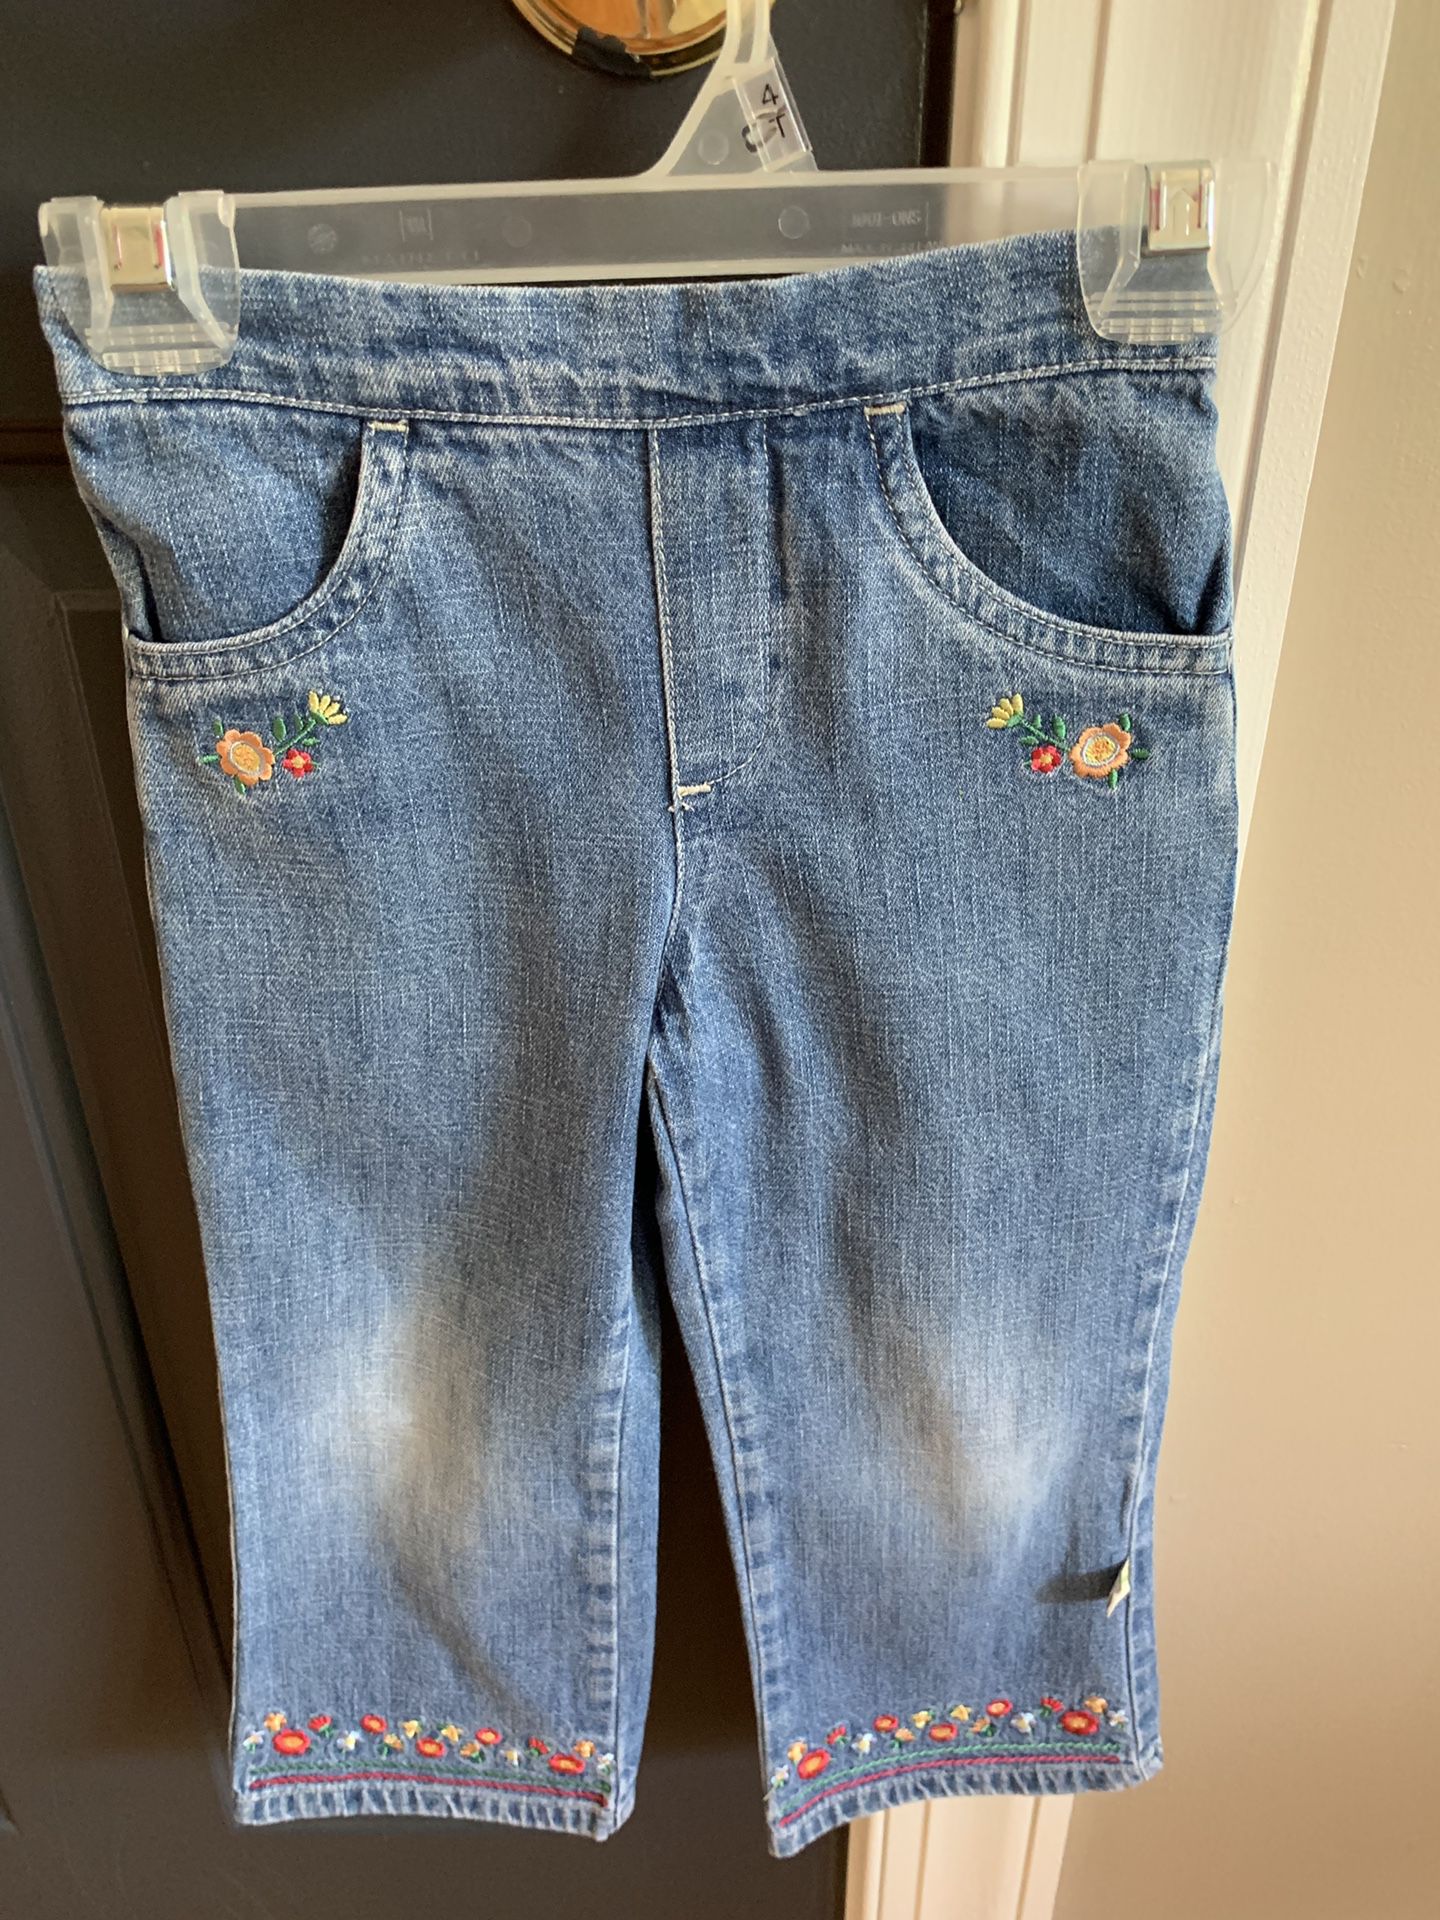 Girl size 3t Disney jeans